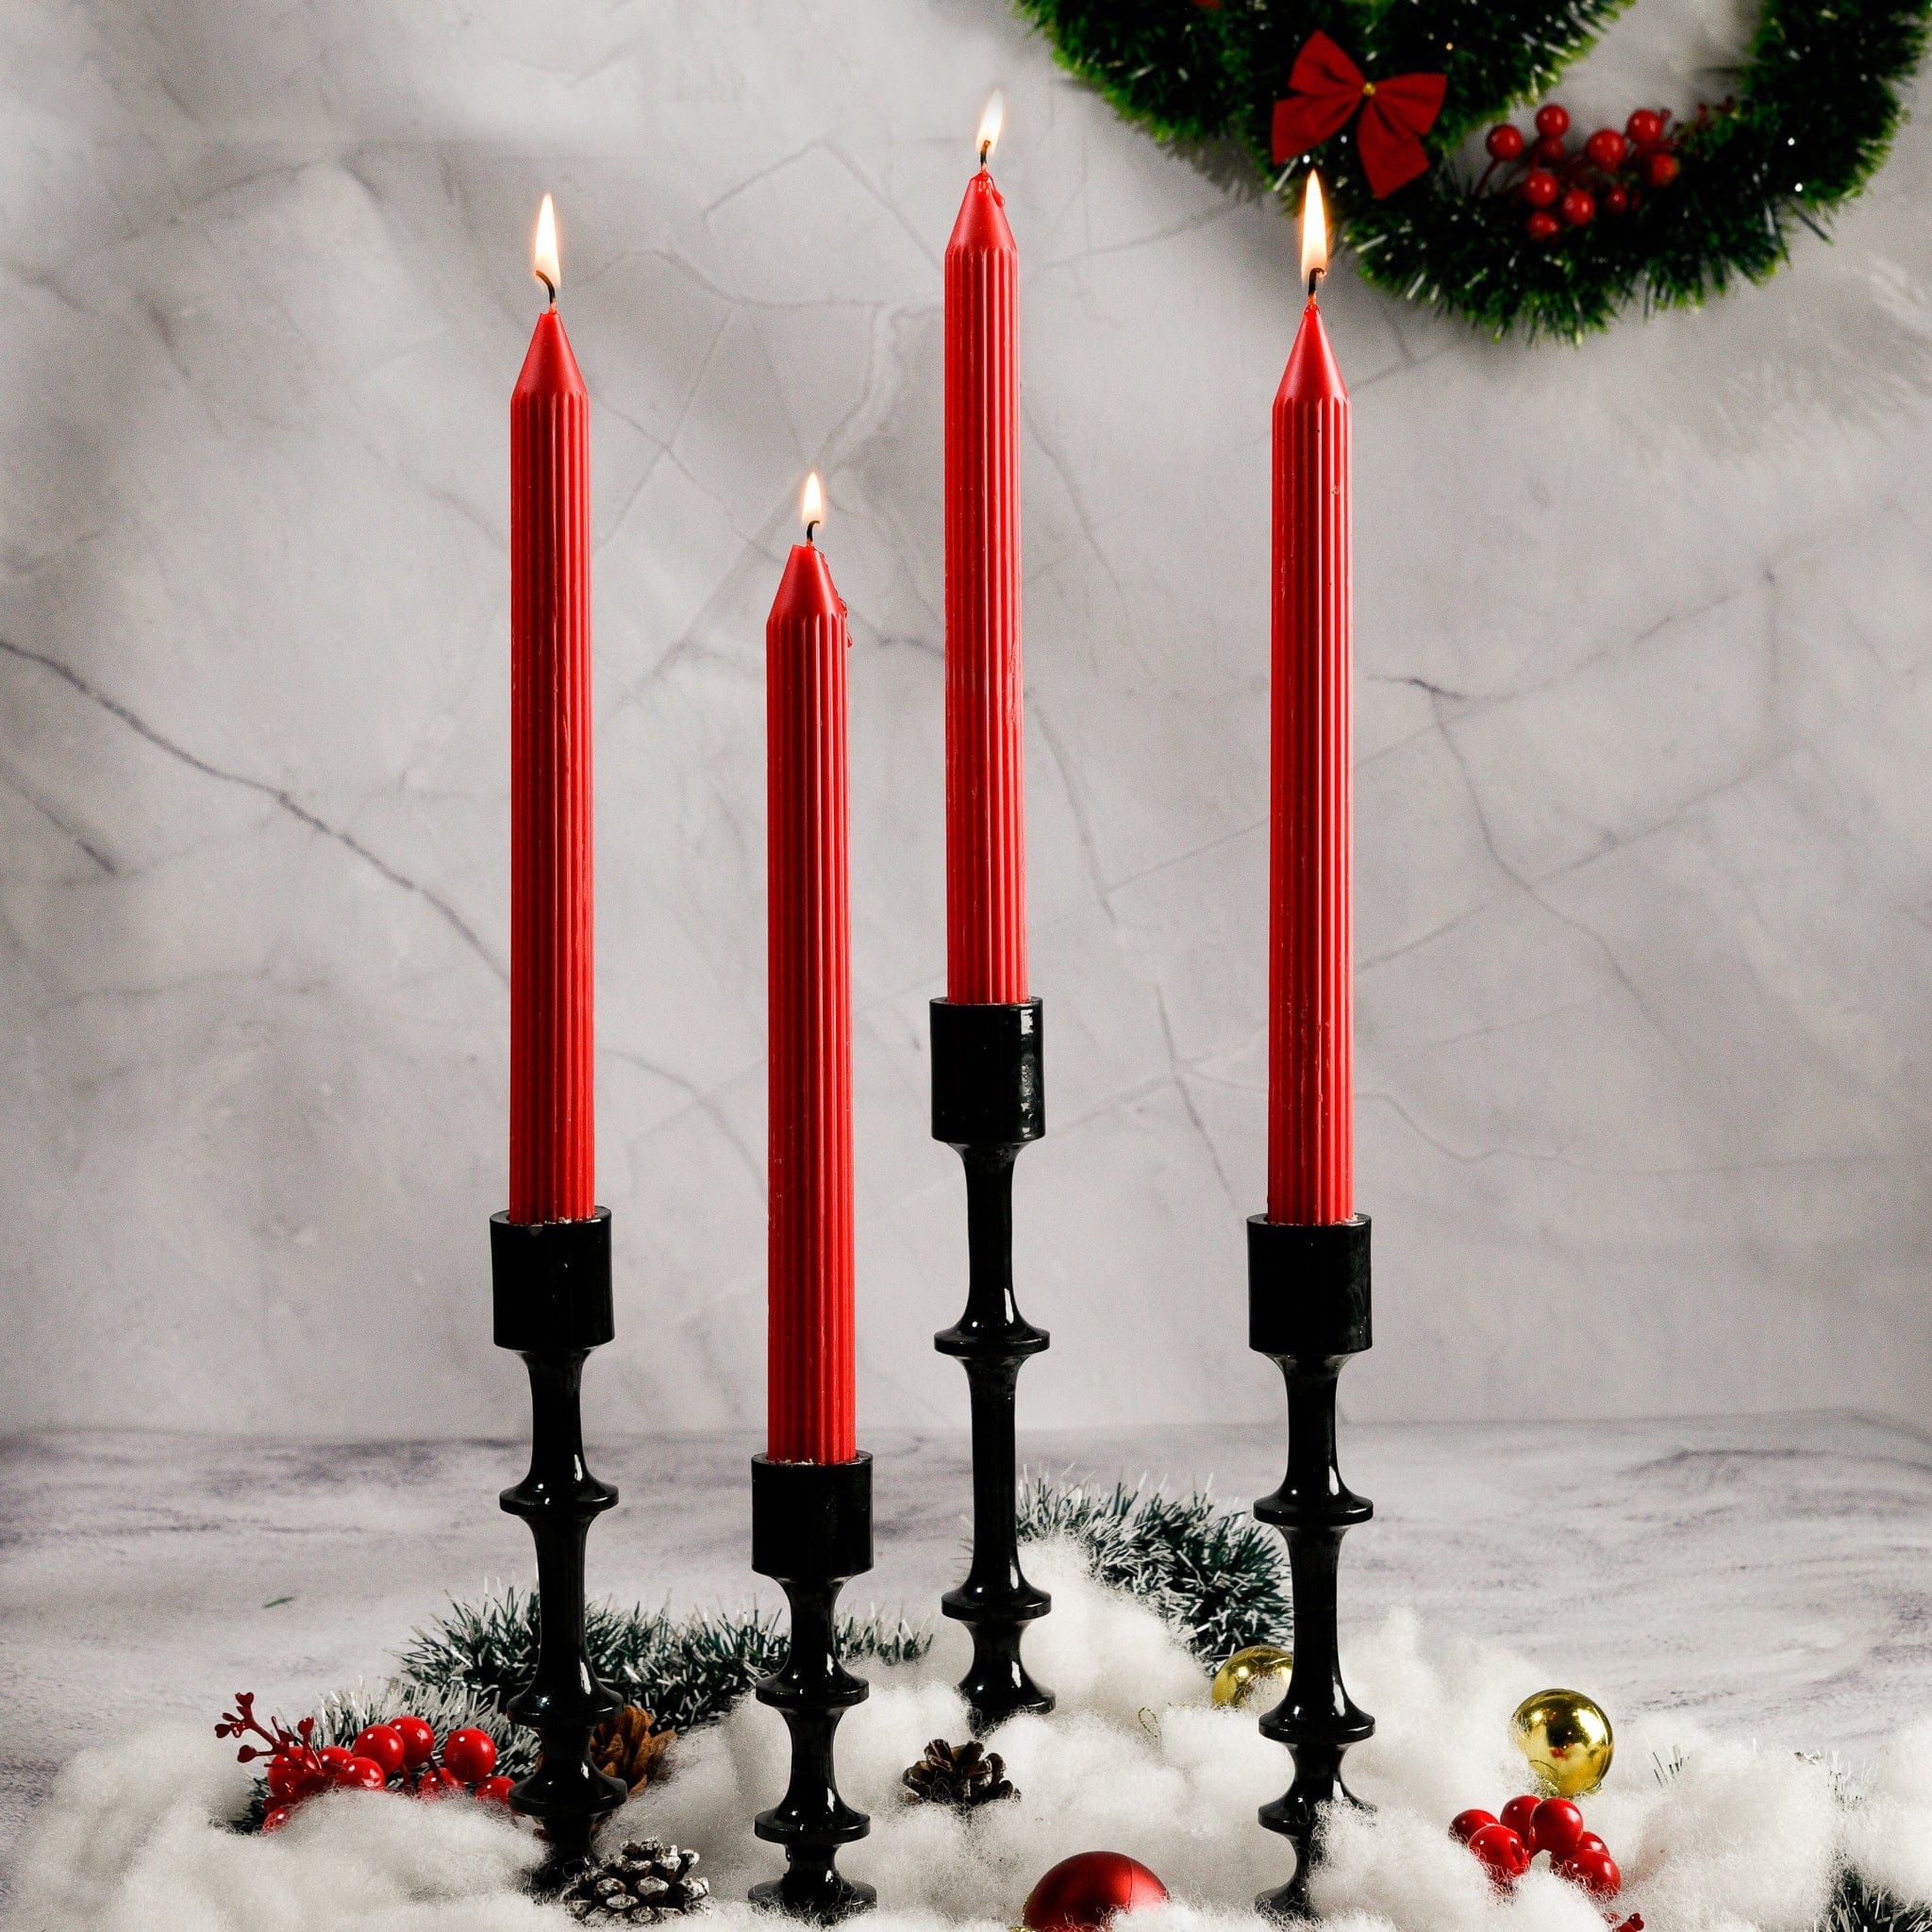 Set of 4 Guidance Taper Candles - Bergamot & Vanilla Scented